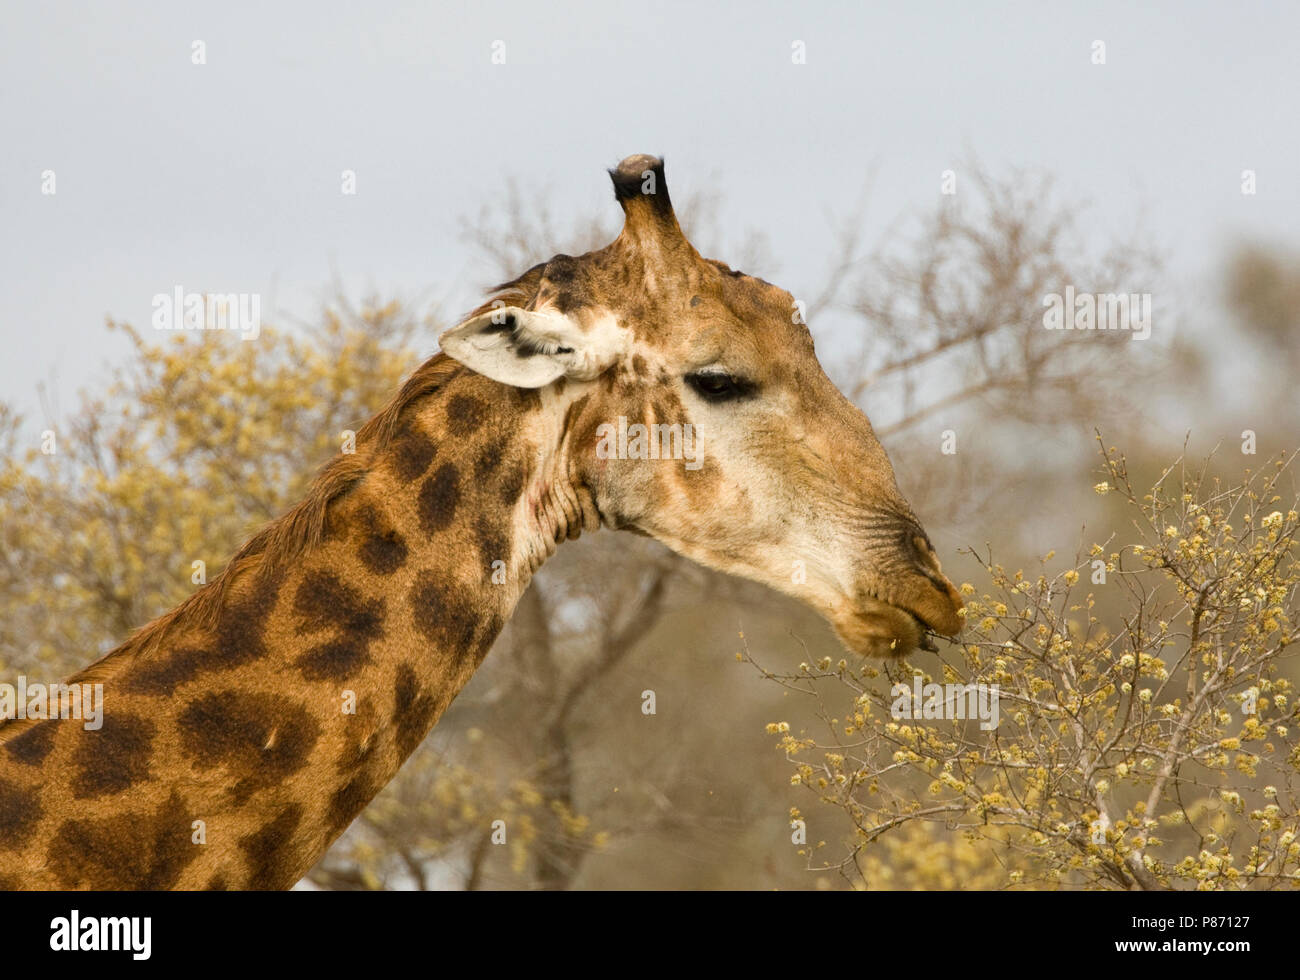 Foeragerende Giraffe; Foraging Southern Giraffe Stock Photo